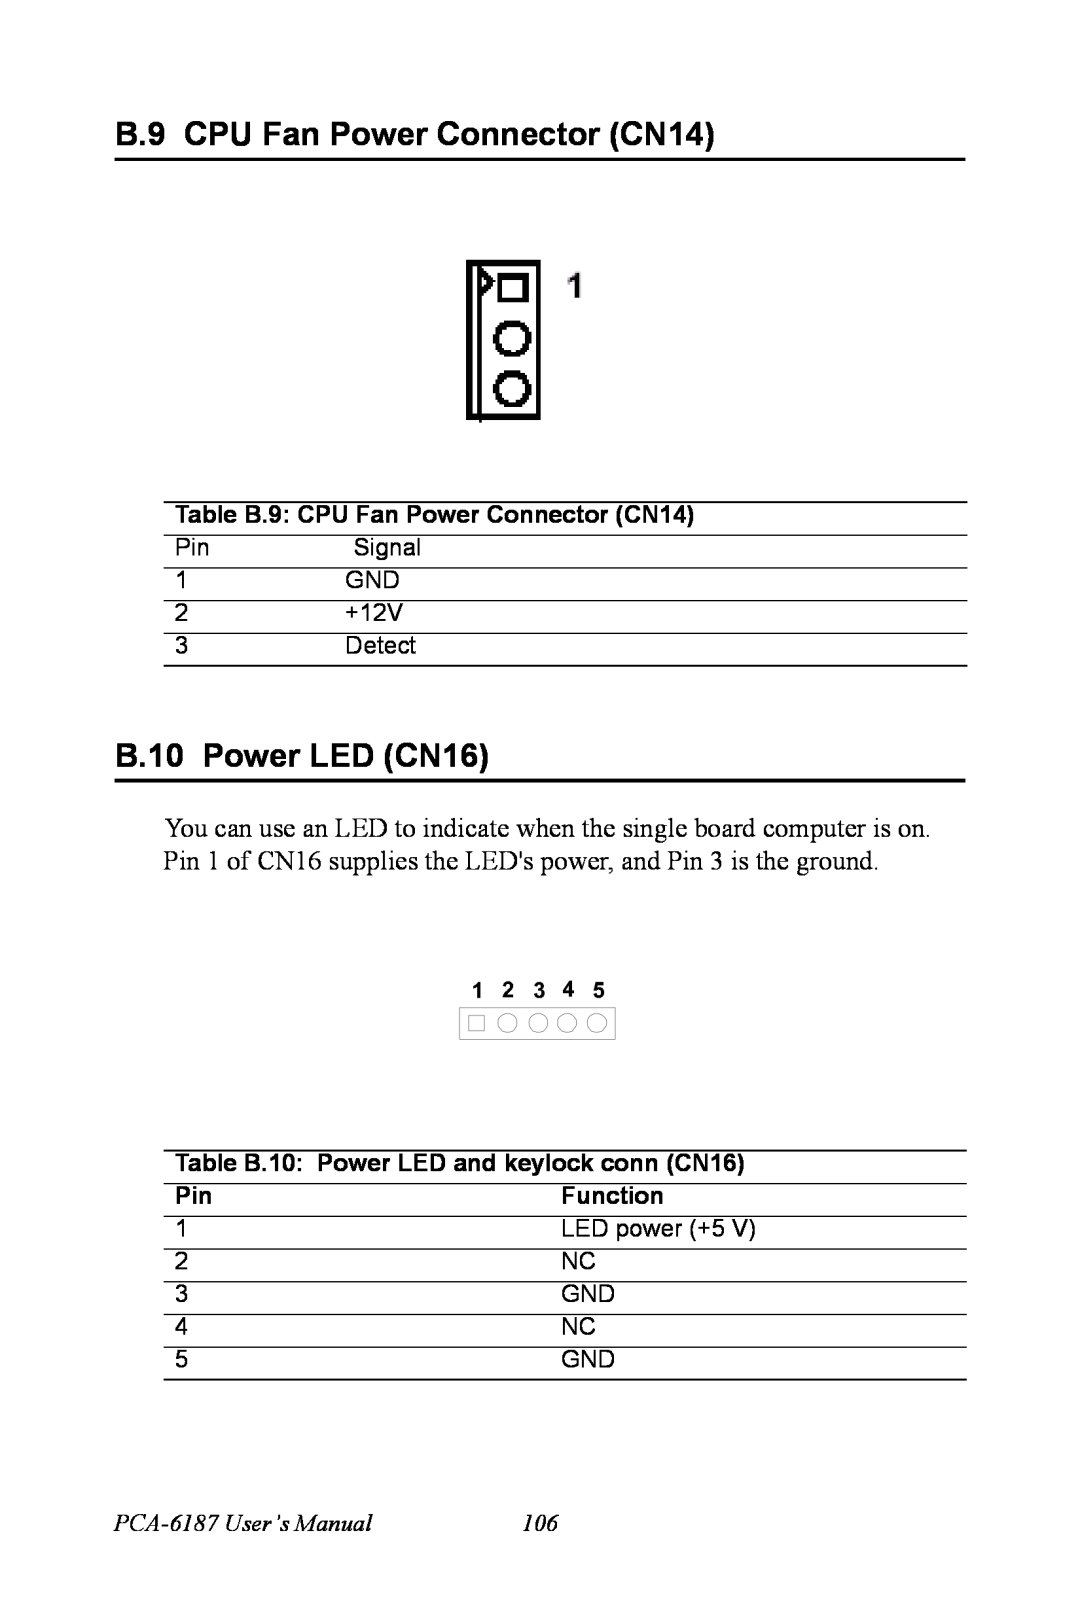 Advantech user manual B.10 Power LED CN16, Table B.9 CPU Fan Power Connector CN14, Function, PCA-6187 User’s Manual 